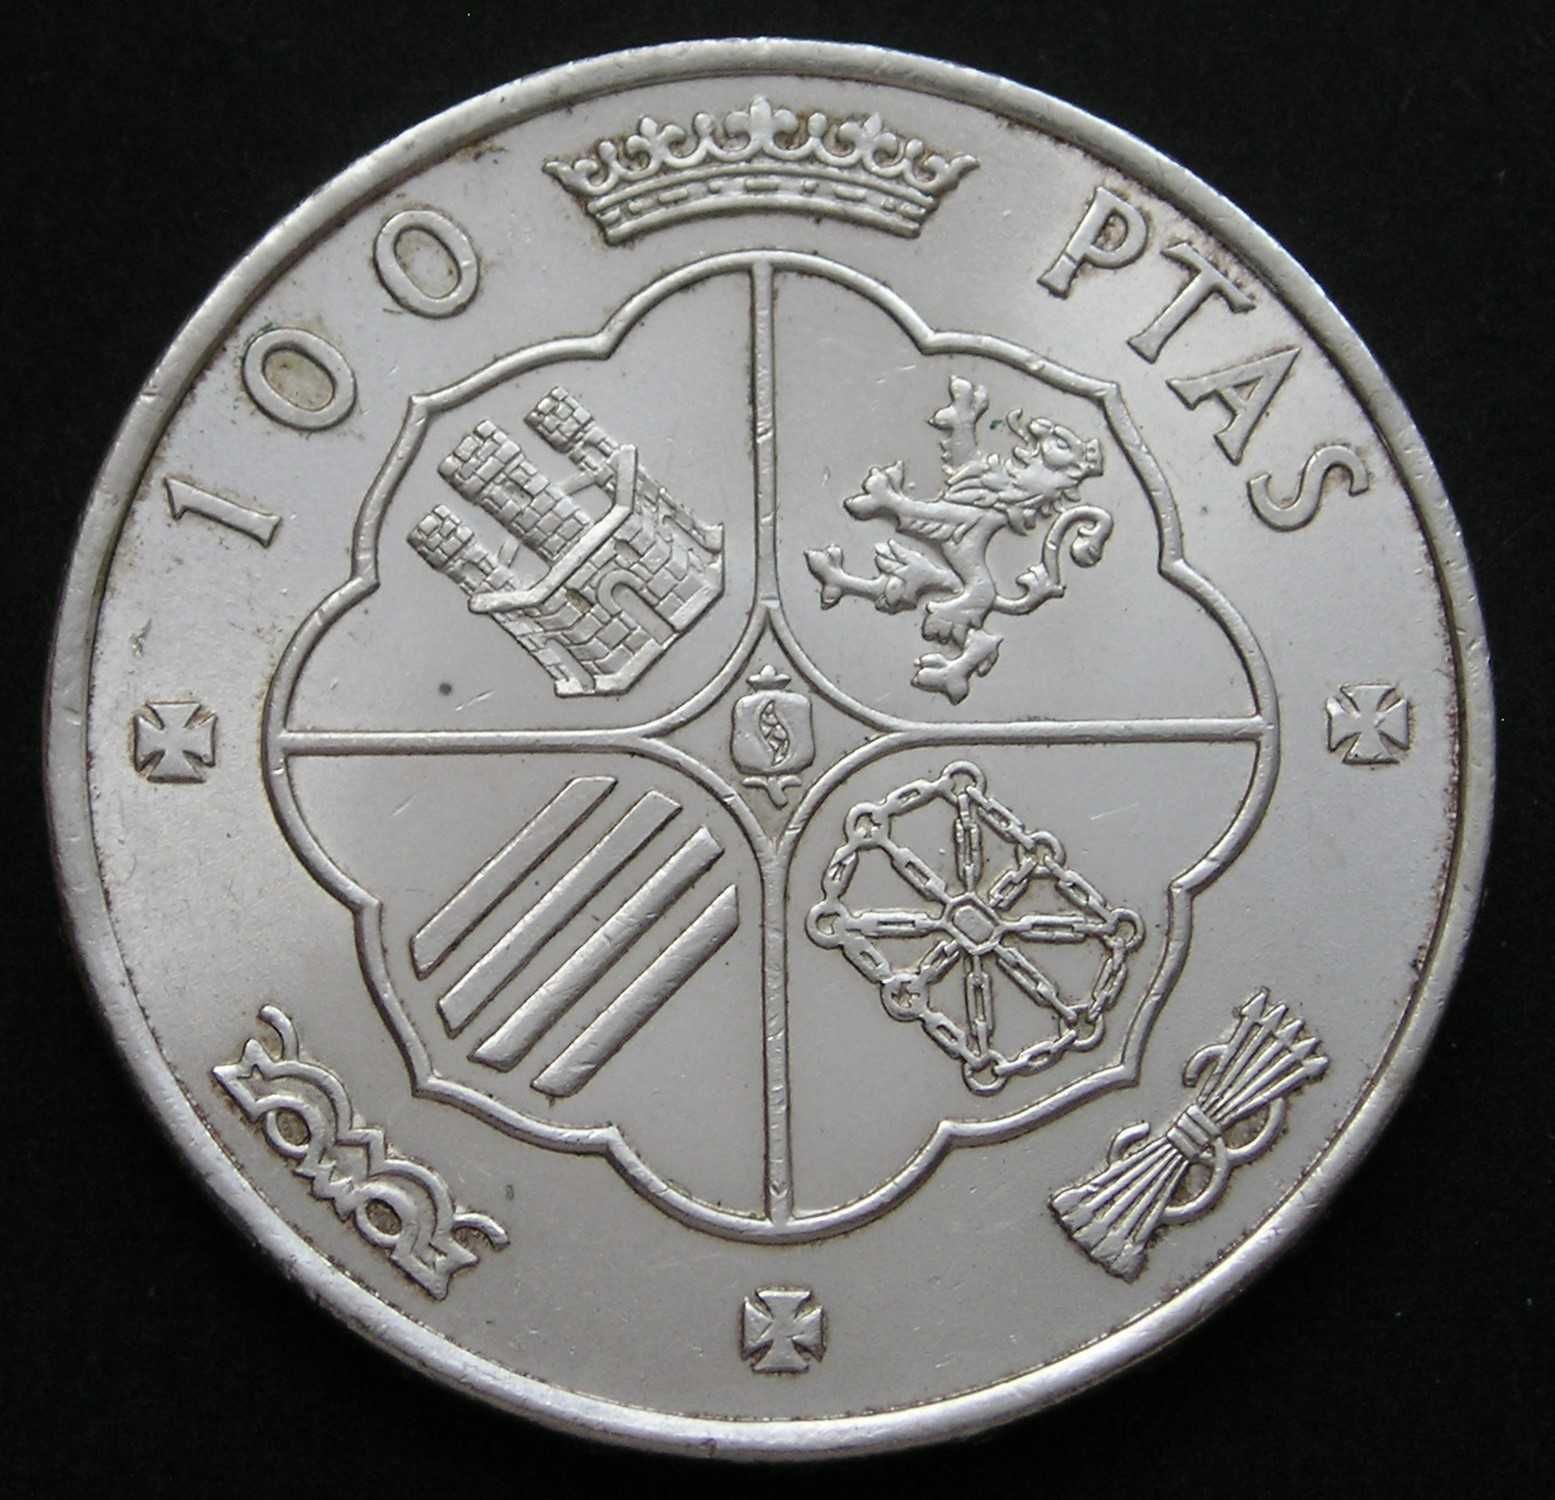 Hiszpania 100 peset 1966 - Francisco Franco Caudillo - srebro